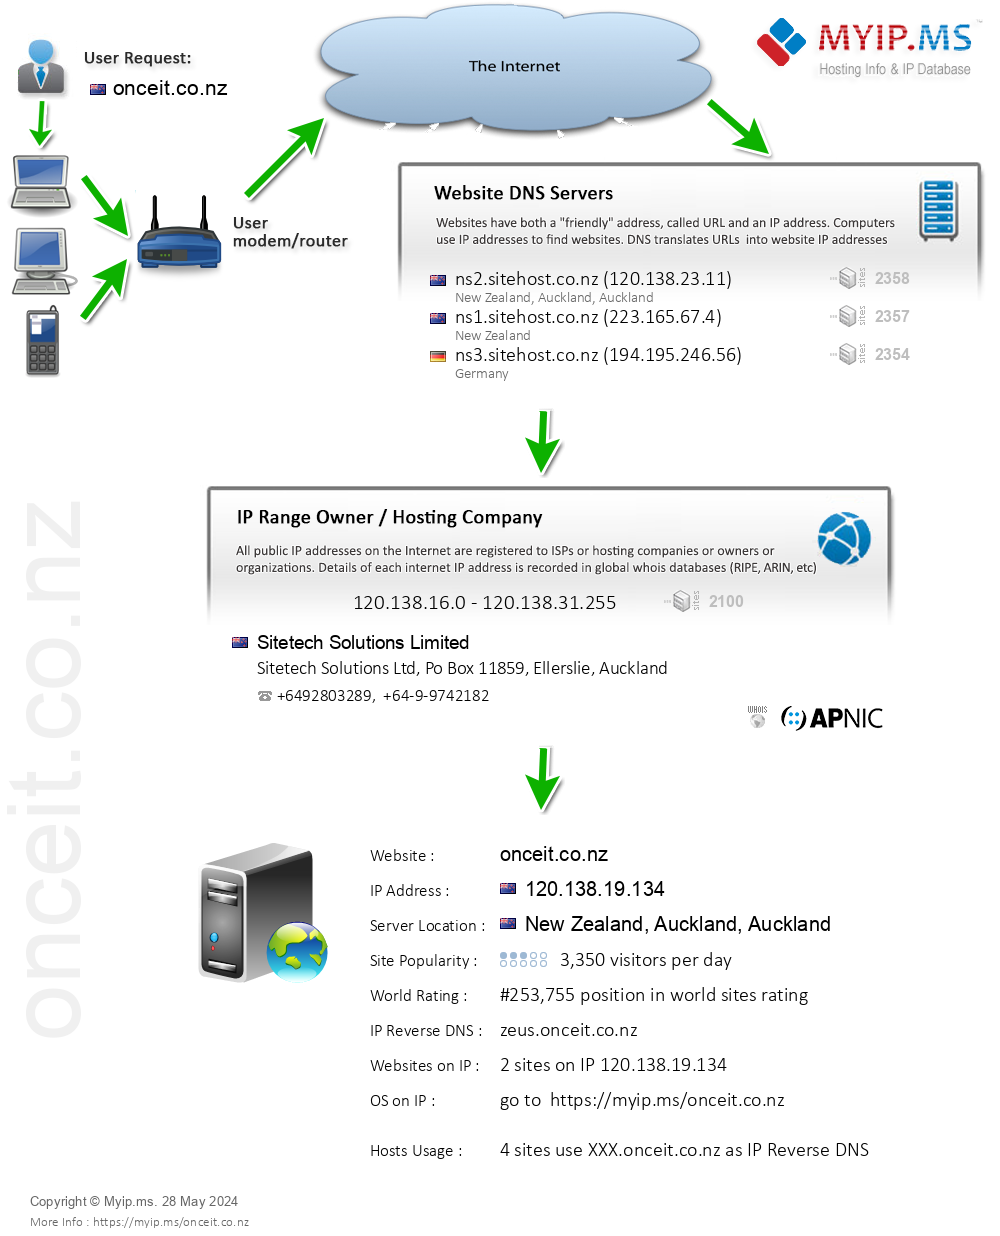 Onceit.co.nz - Website Hosting Visual IP Diagram